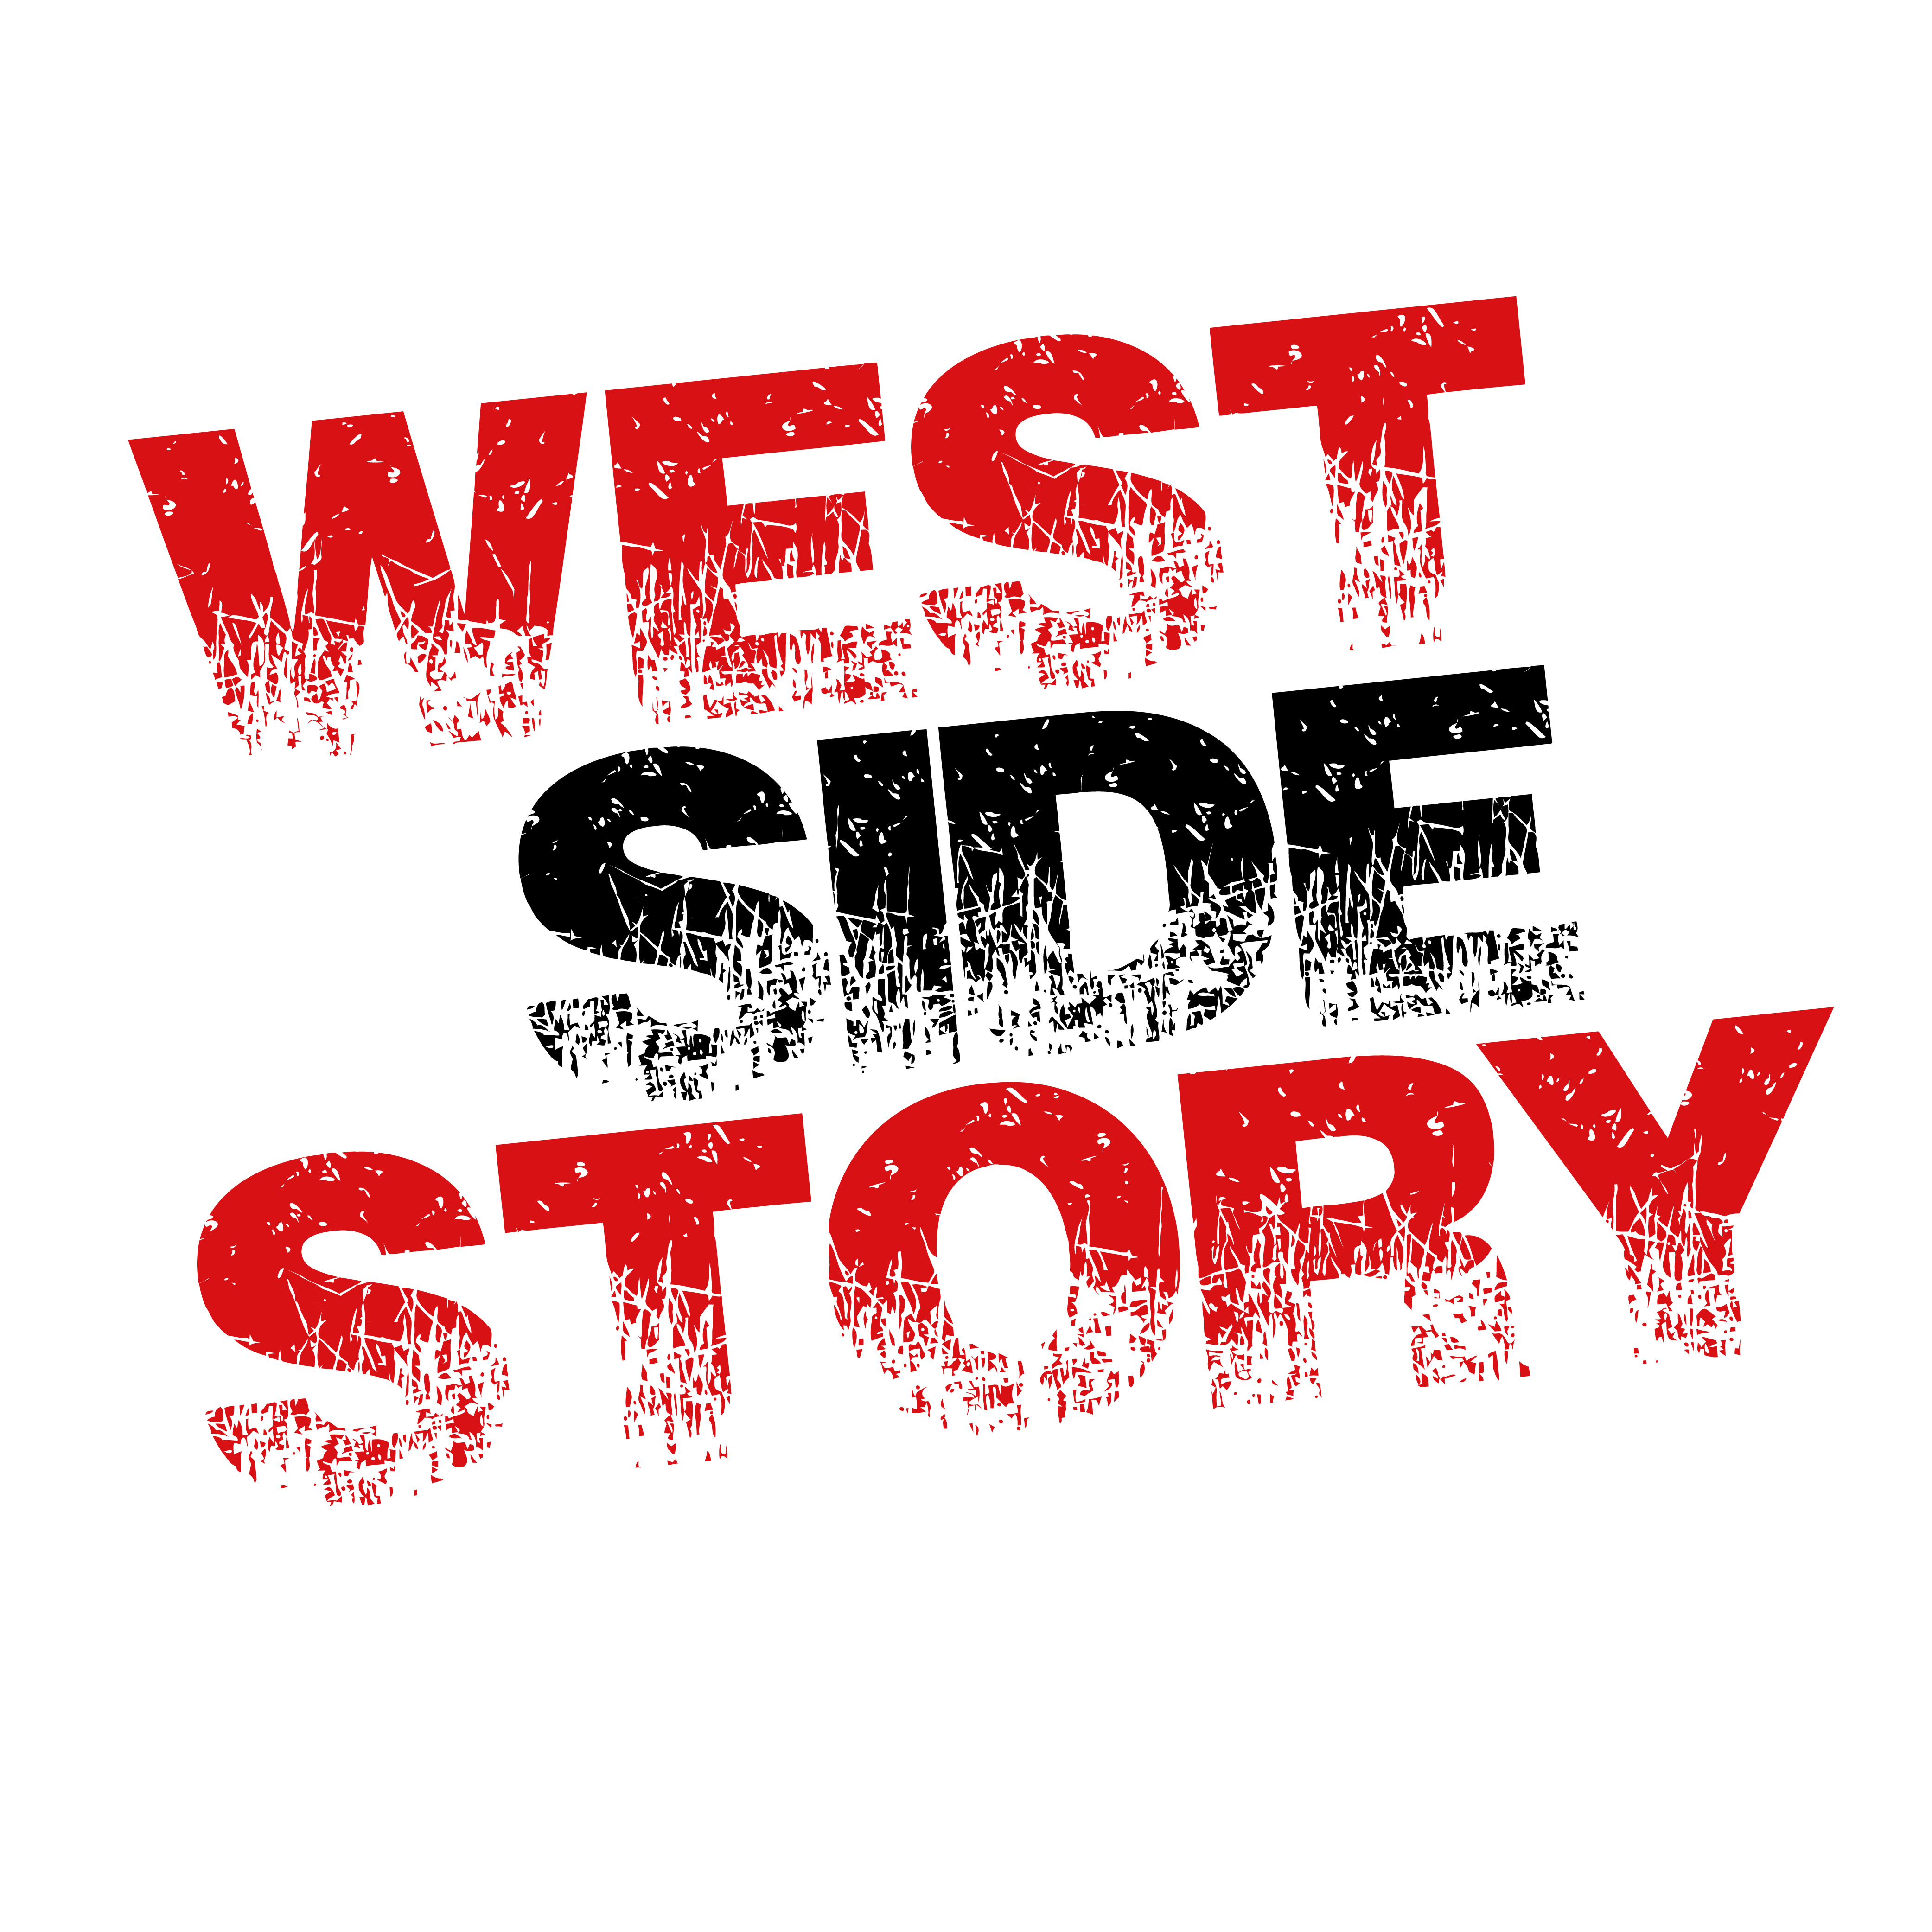 West Side Story HD wallpapers, Desktop wallpaper - most viewed